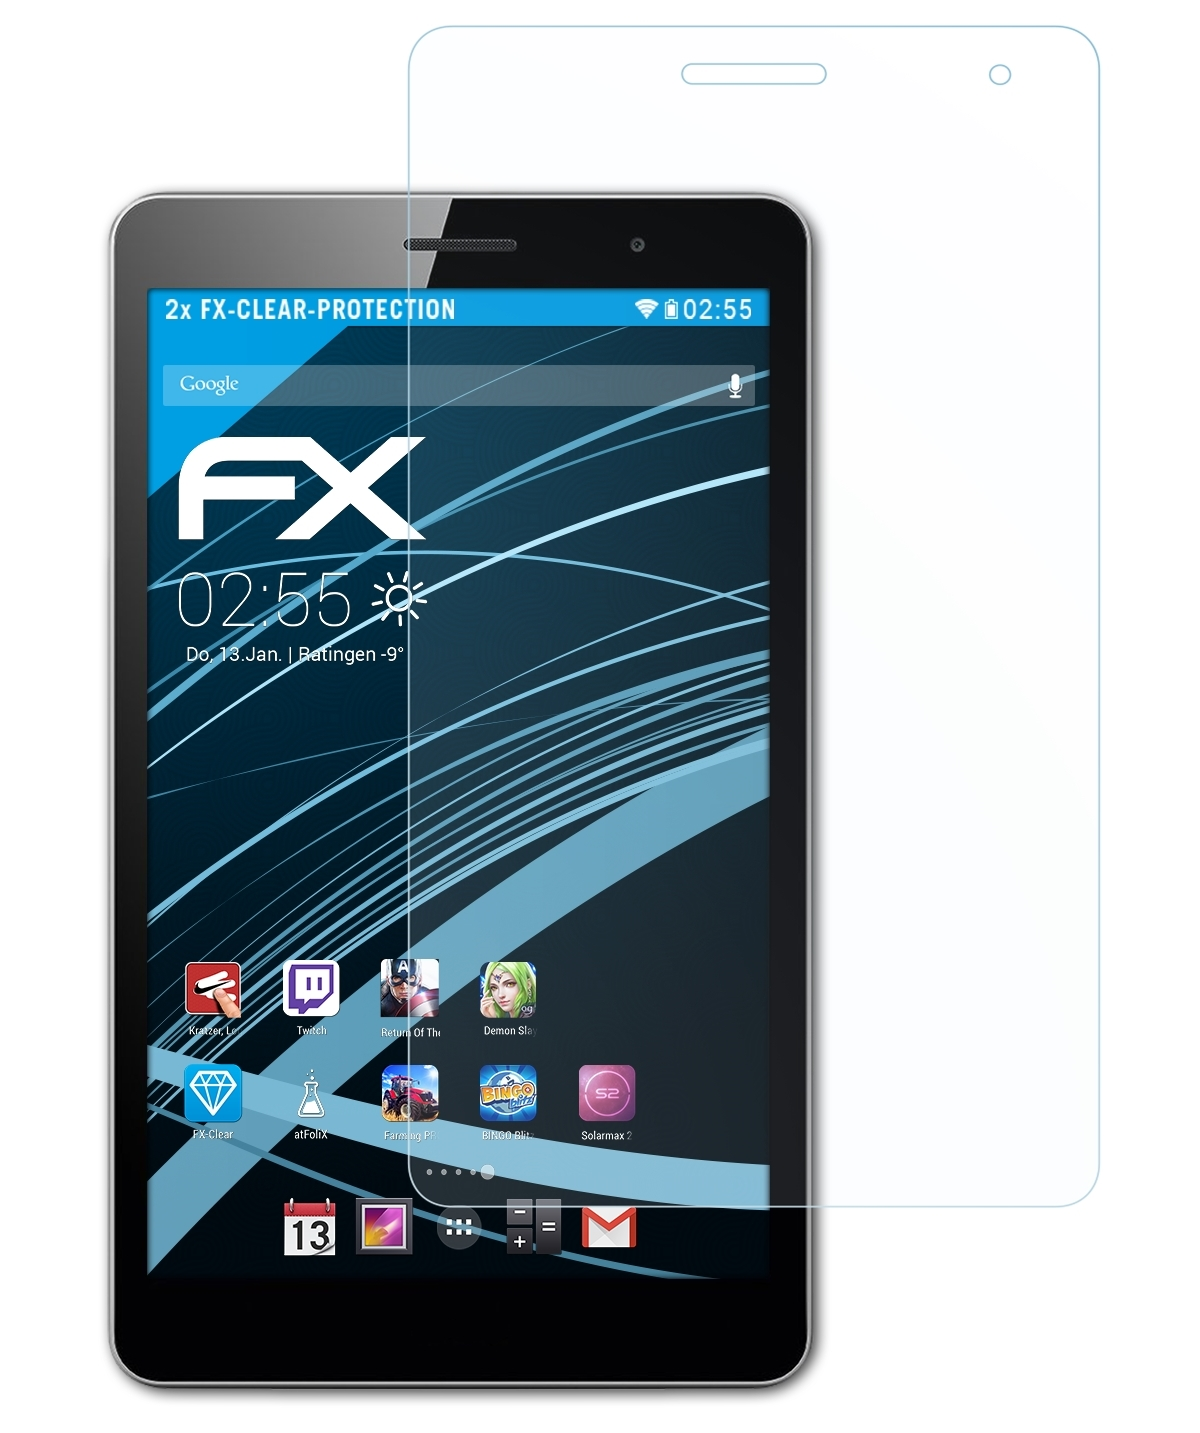 3G) MediaPad Displayschutz(für FX-Clear 2x ATFOLIX Huawei 7.0 T3